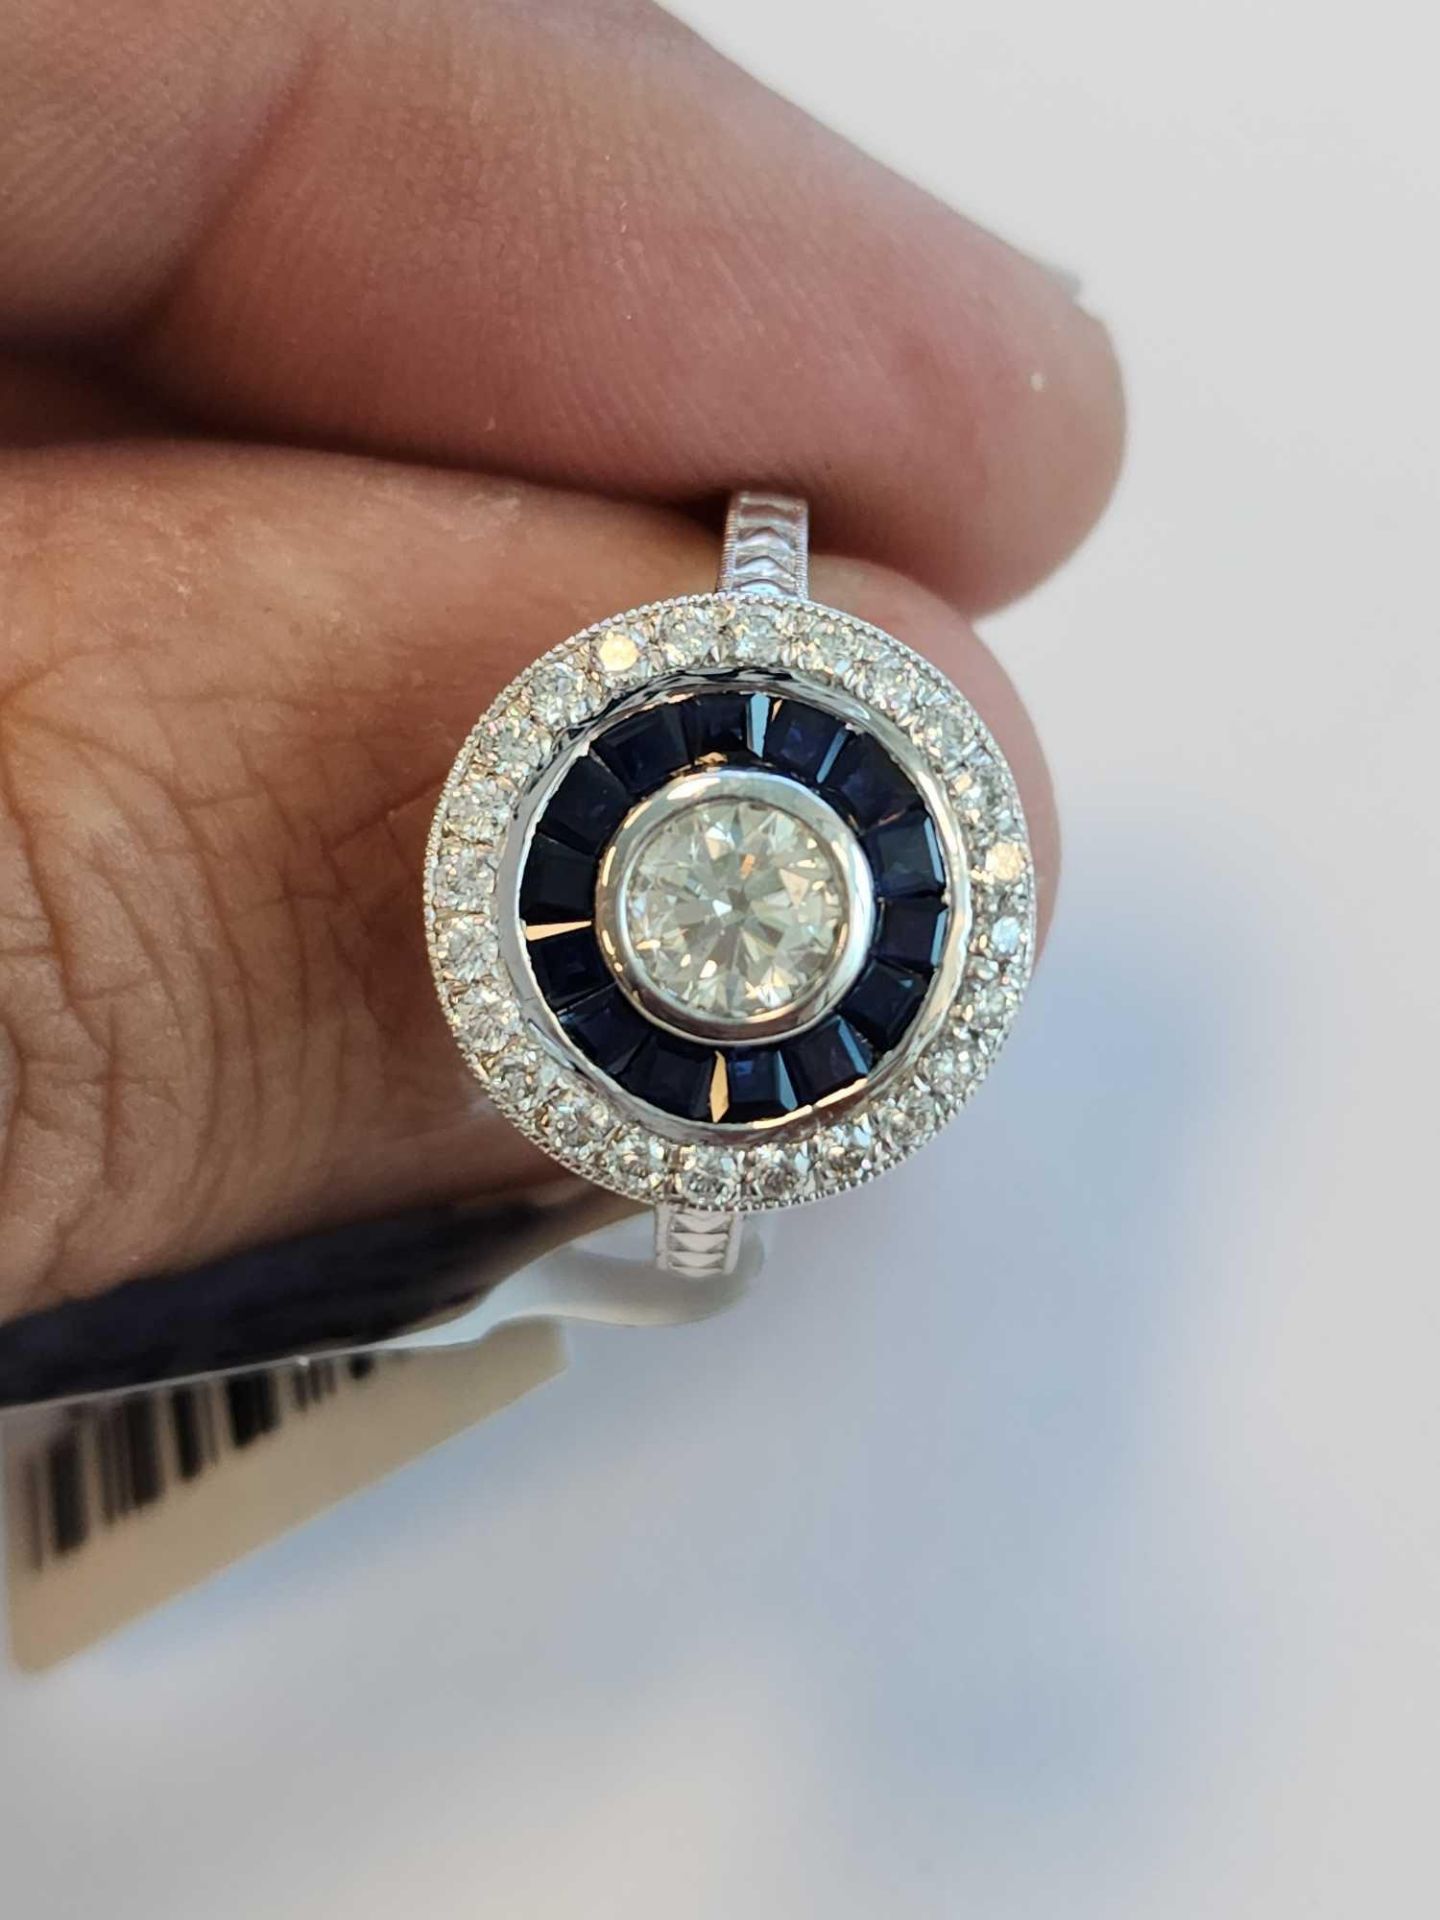 Lady's Diamond & Sapphire Ring, Platinum mounting 24 round brillant cut diamonds - Image 2 of 7